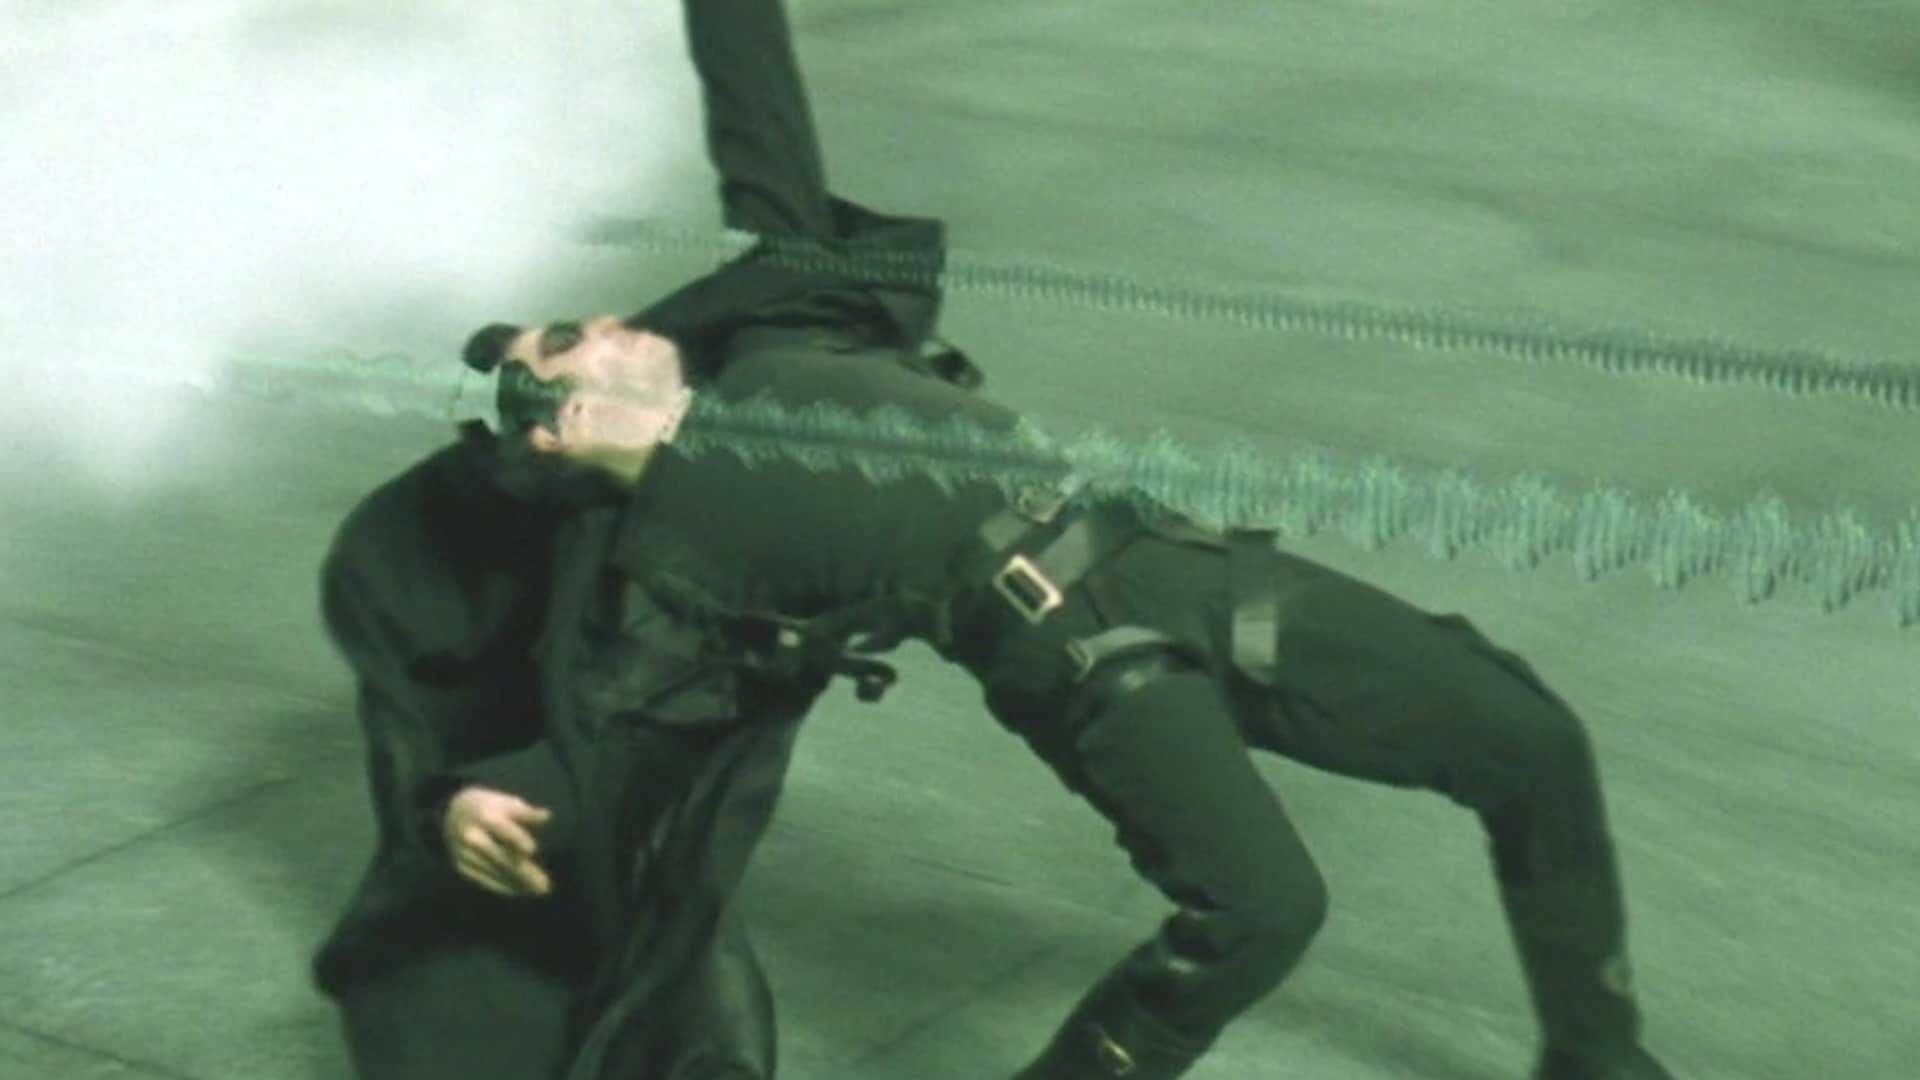 famous bullet dodging scene in the matrix